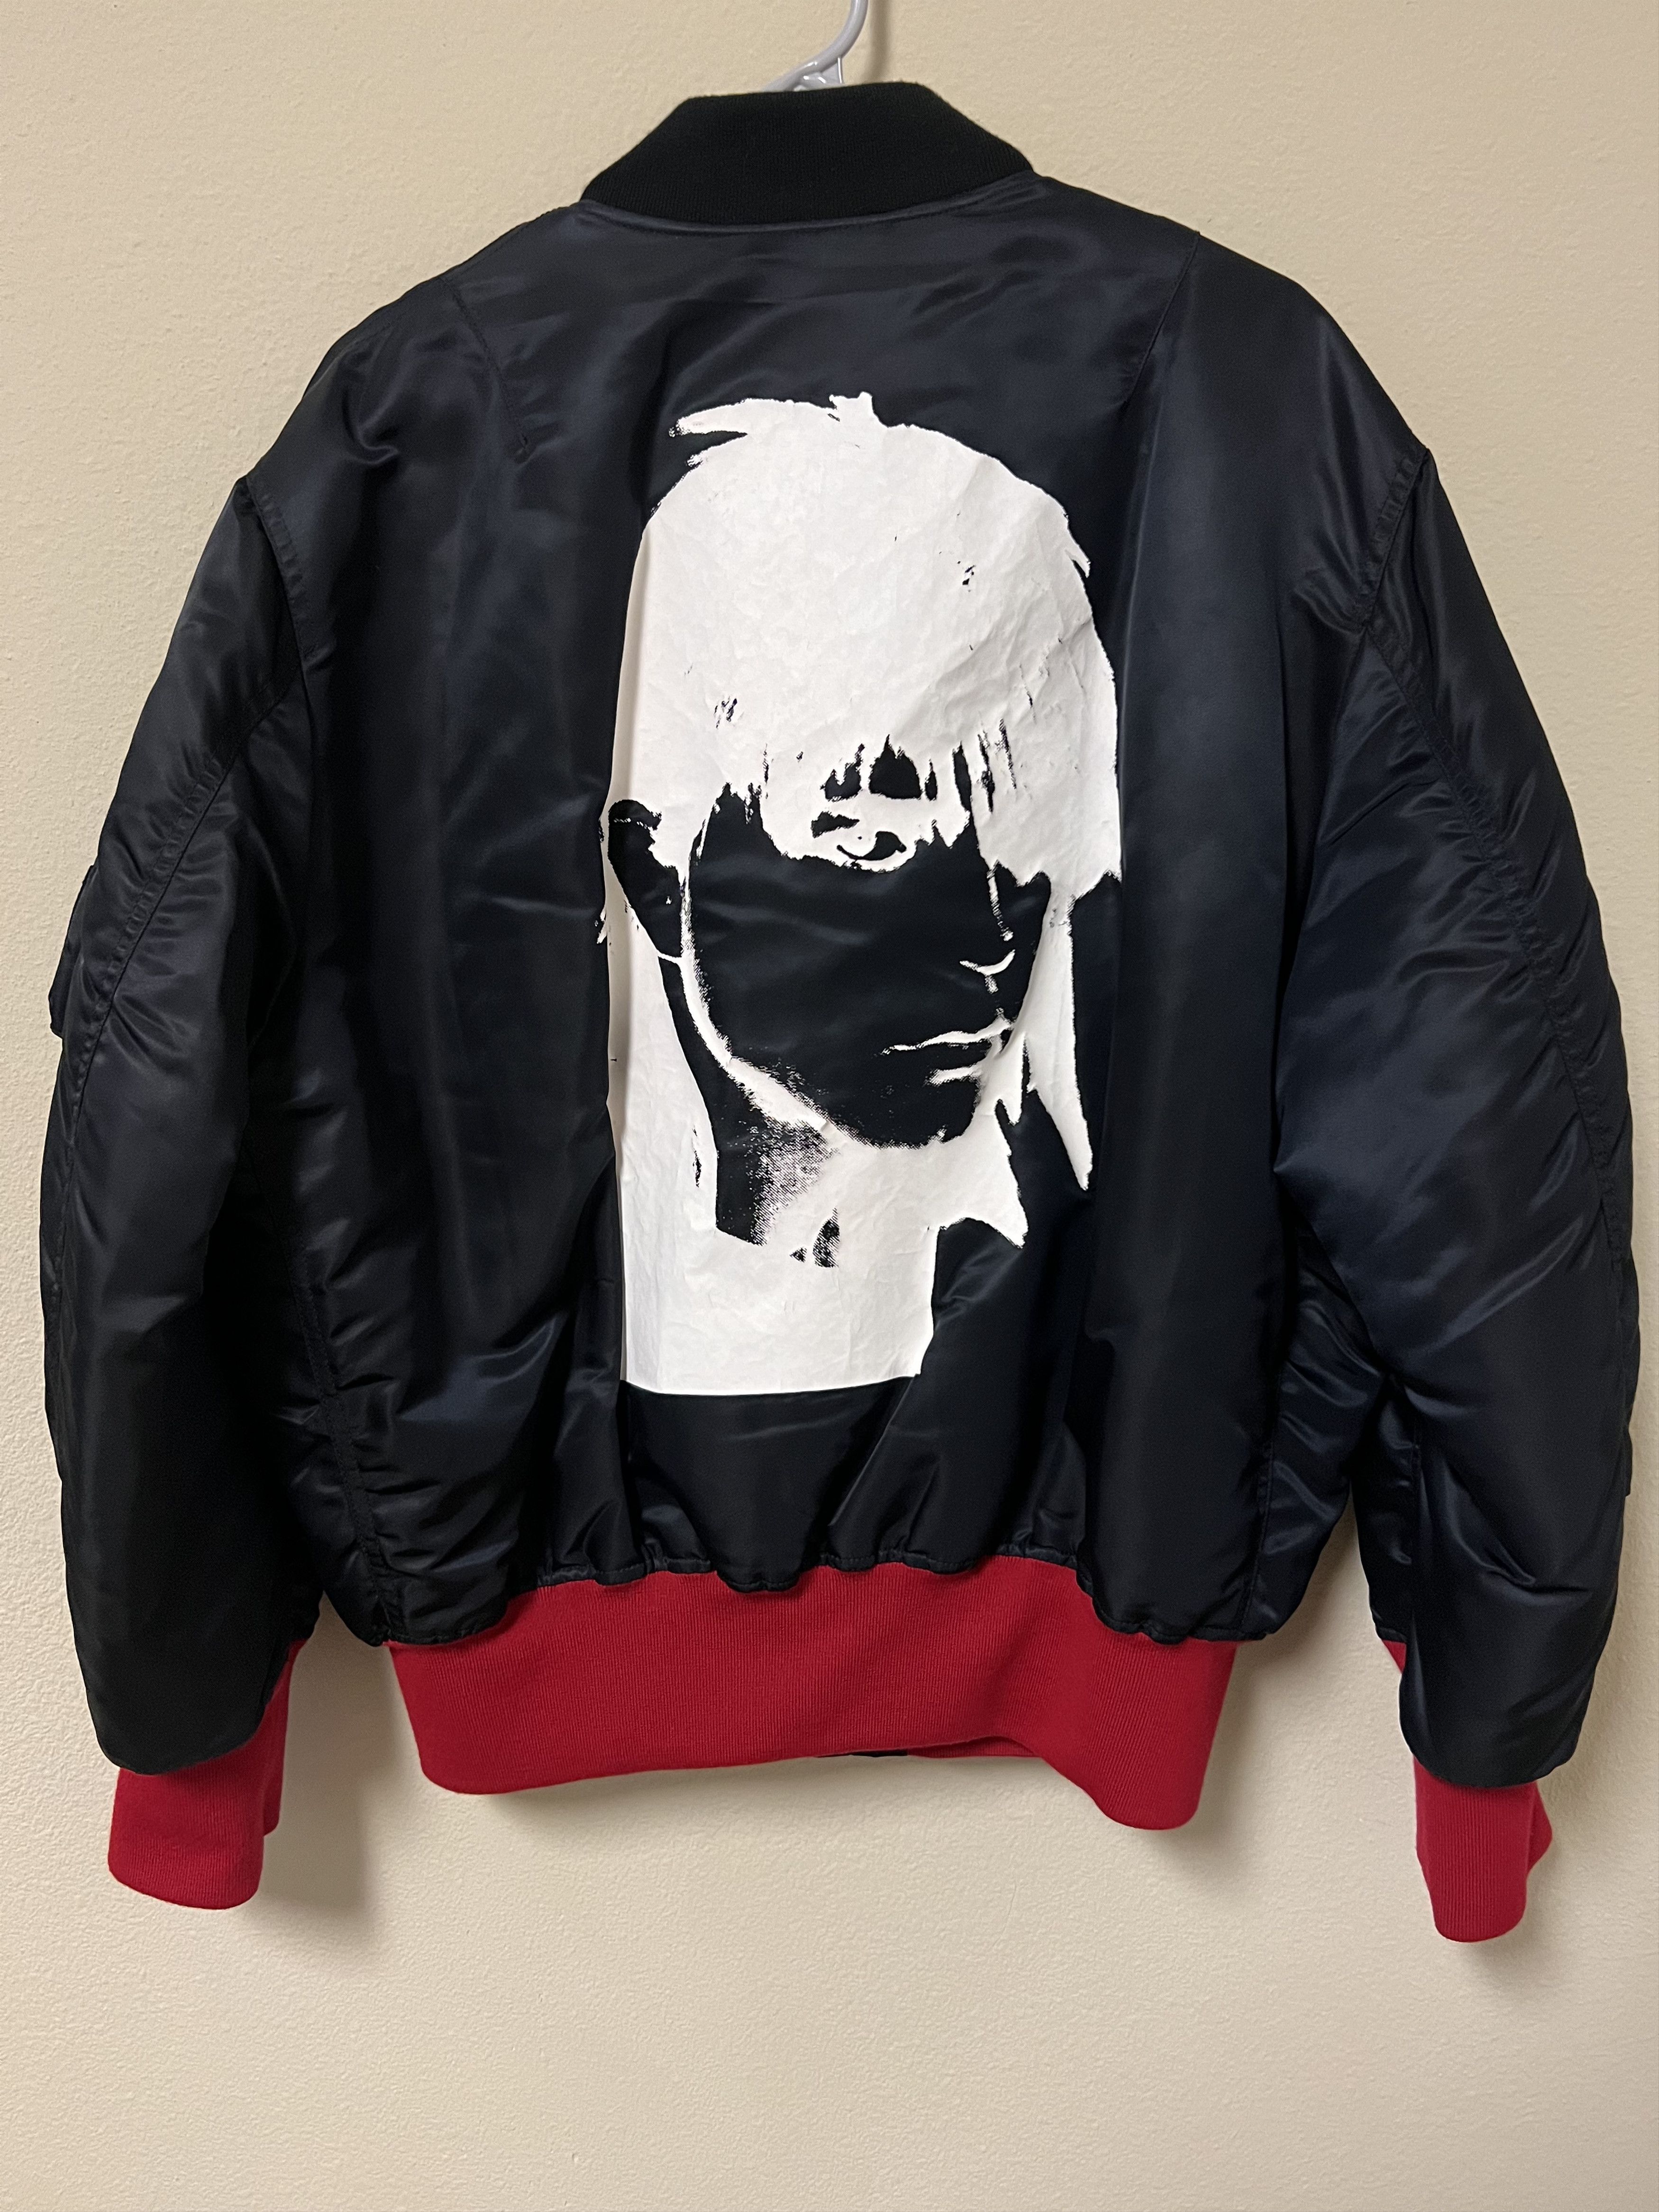 Raf Simons Calvin Klein 205w39nyc back print bomber jacket | Grailed